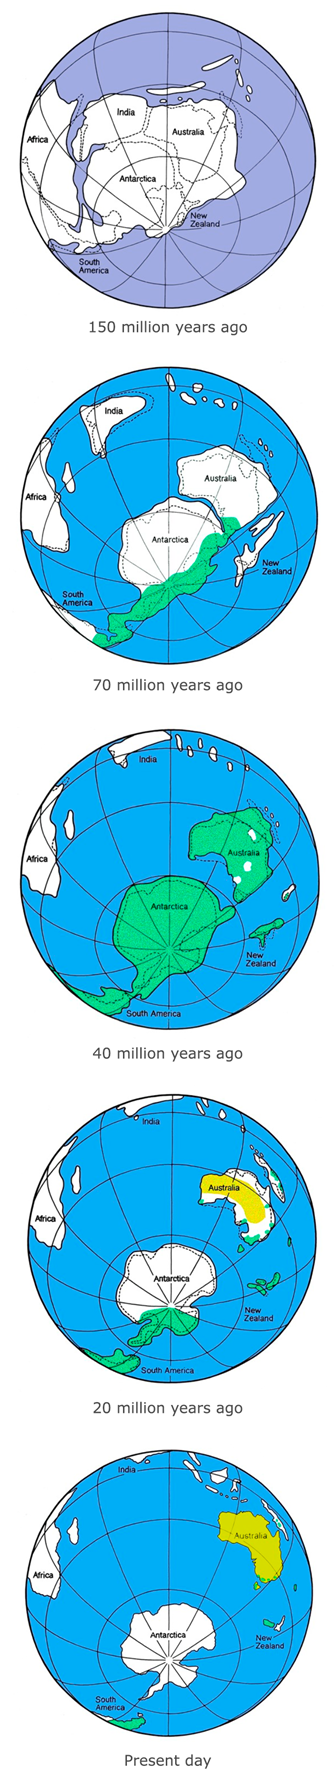 Illustration of Gondwana 150 million years ago to present day.